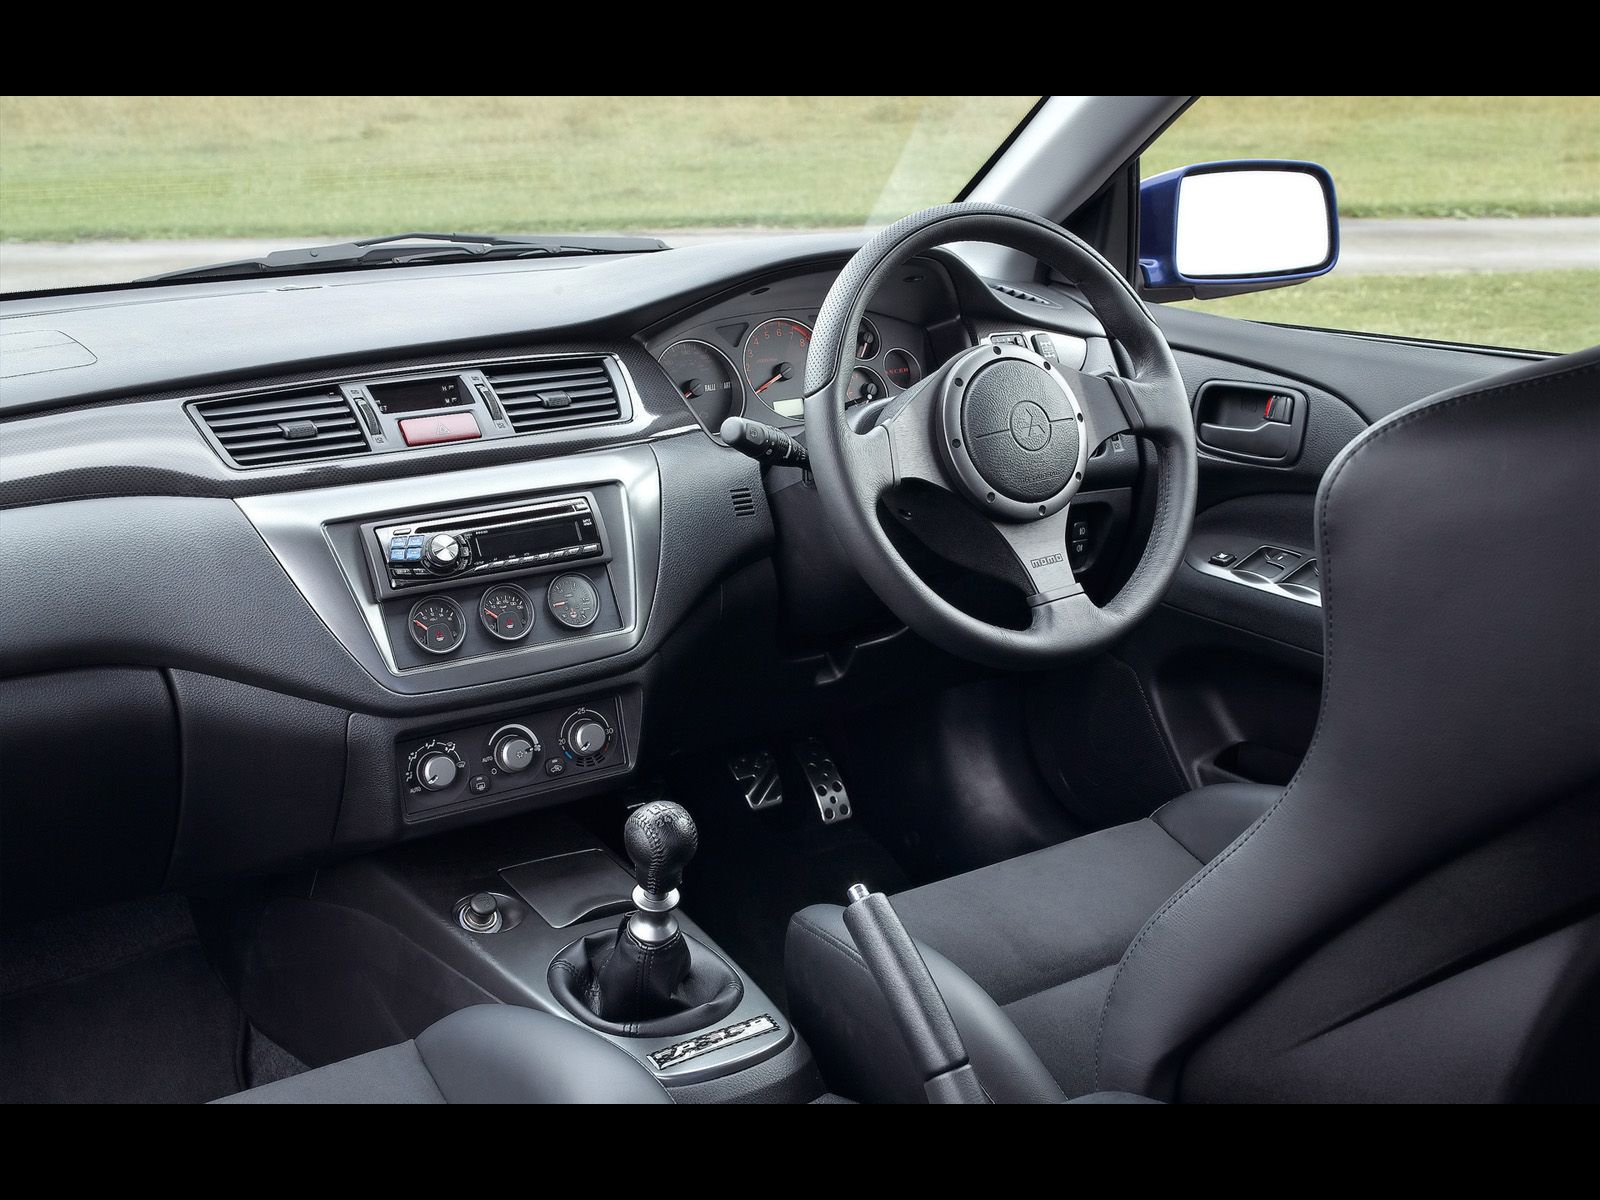 Mitsubishi Lancer Evolution 8 Interior - image #183